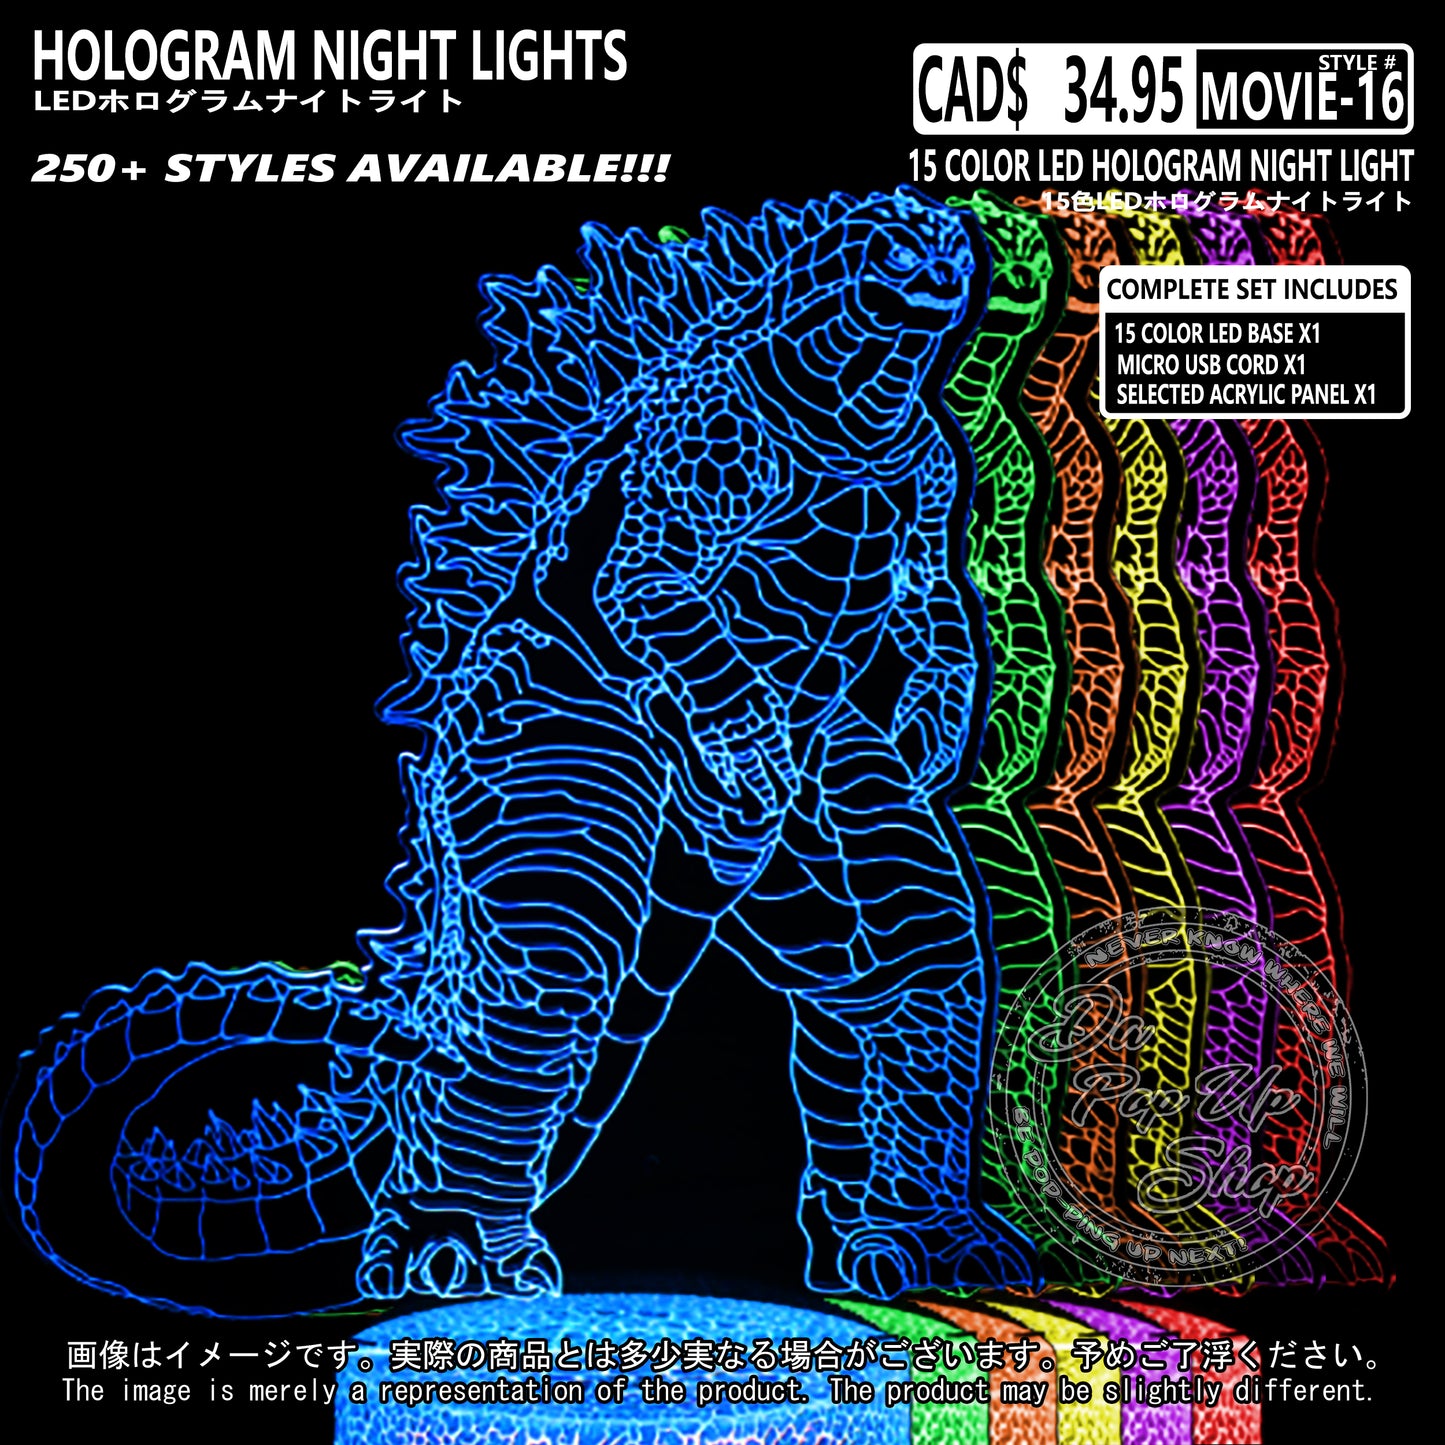 (MOVIE-16) Godzilla Hologram LED Night Light